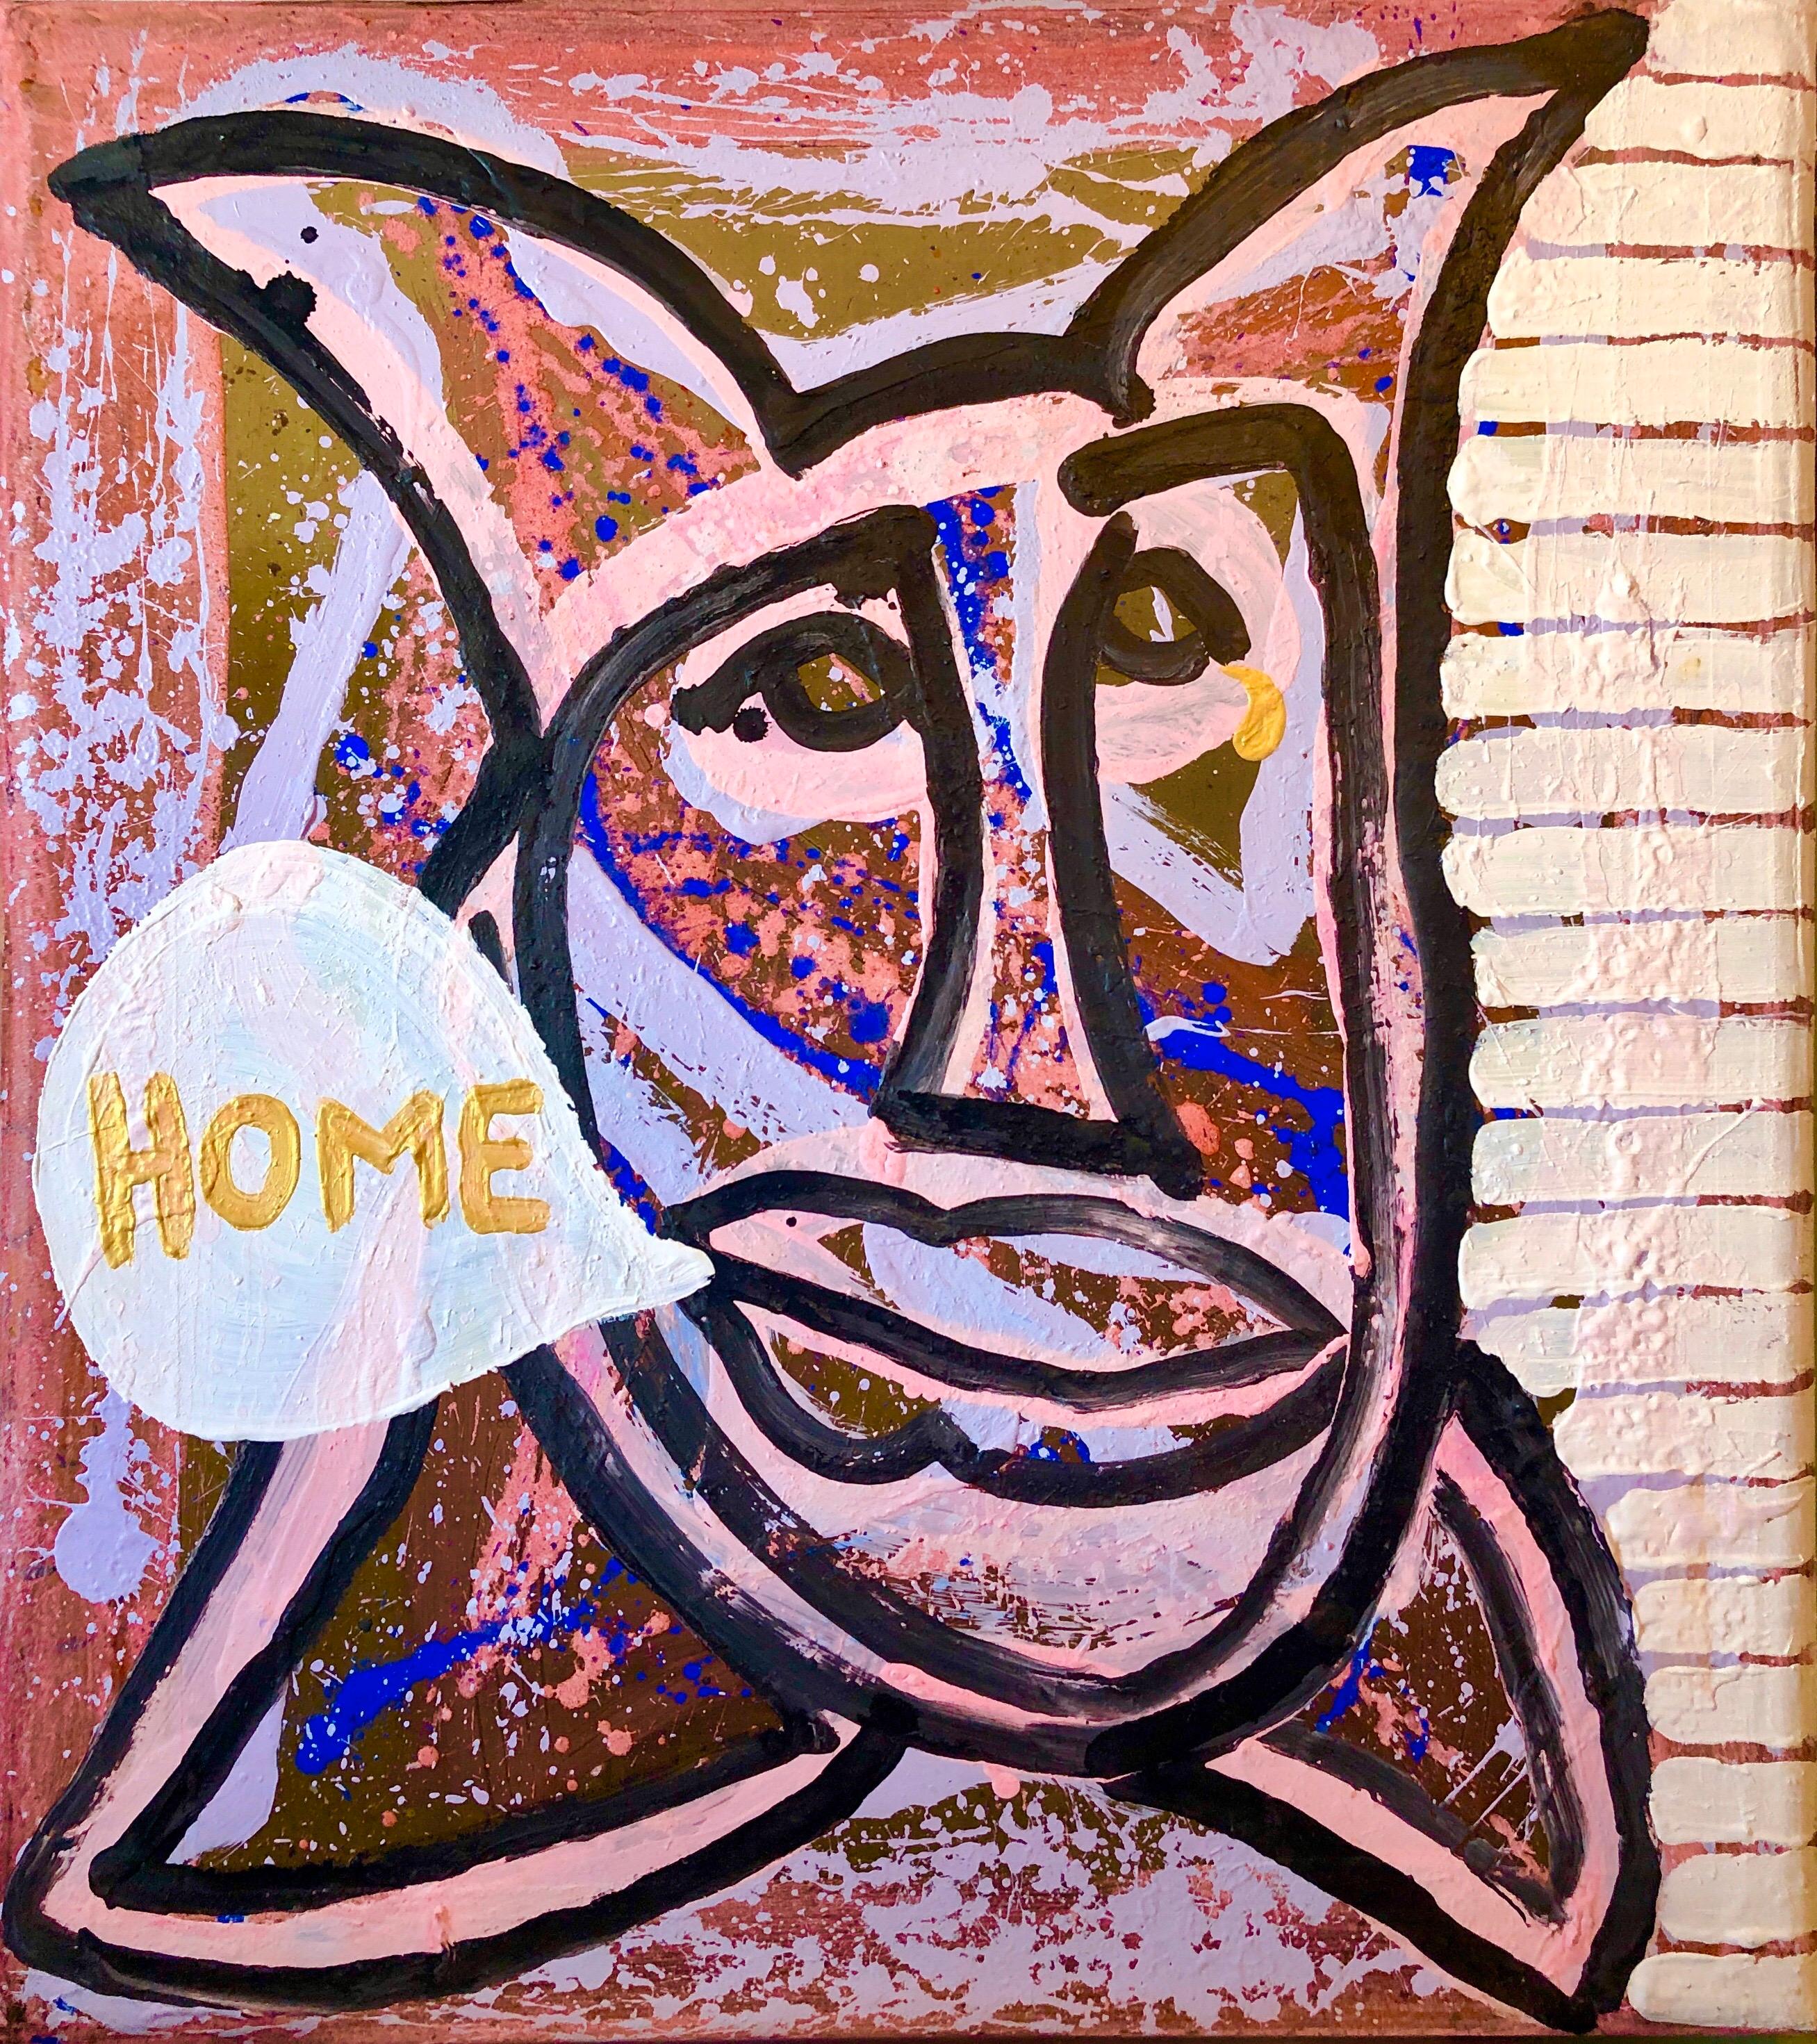 Conceptual Pop Art Color Mixed Media Painting "Home" Brooke Alexander Gallery